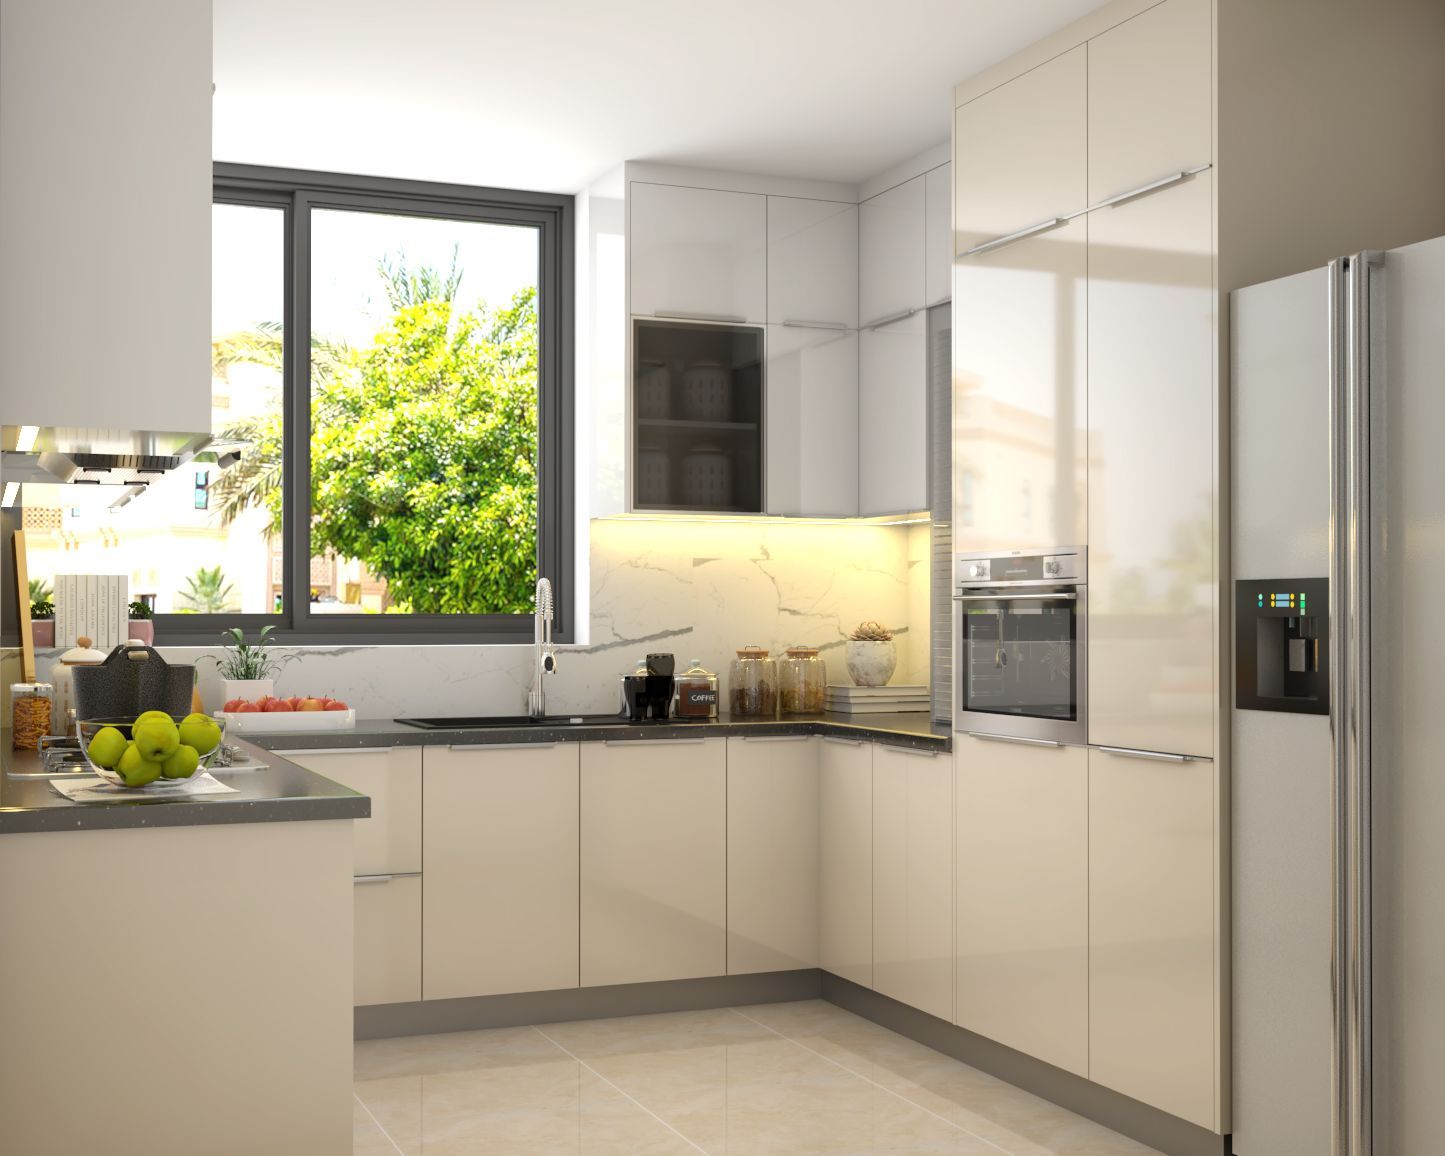 Contemporary U-Shaped Kitchen Design With High-Gloss Laminates